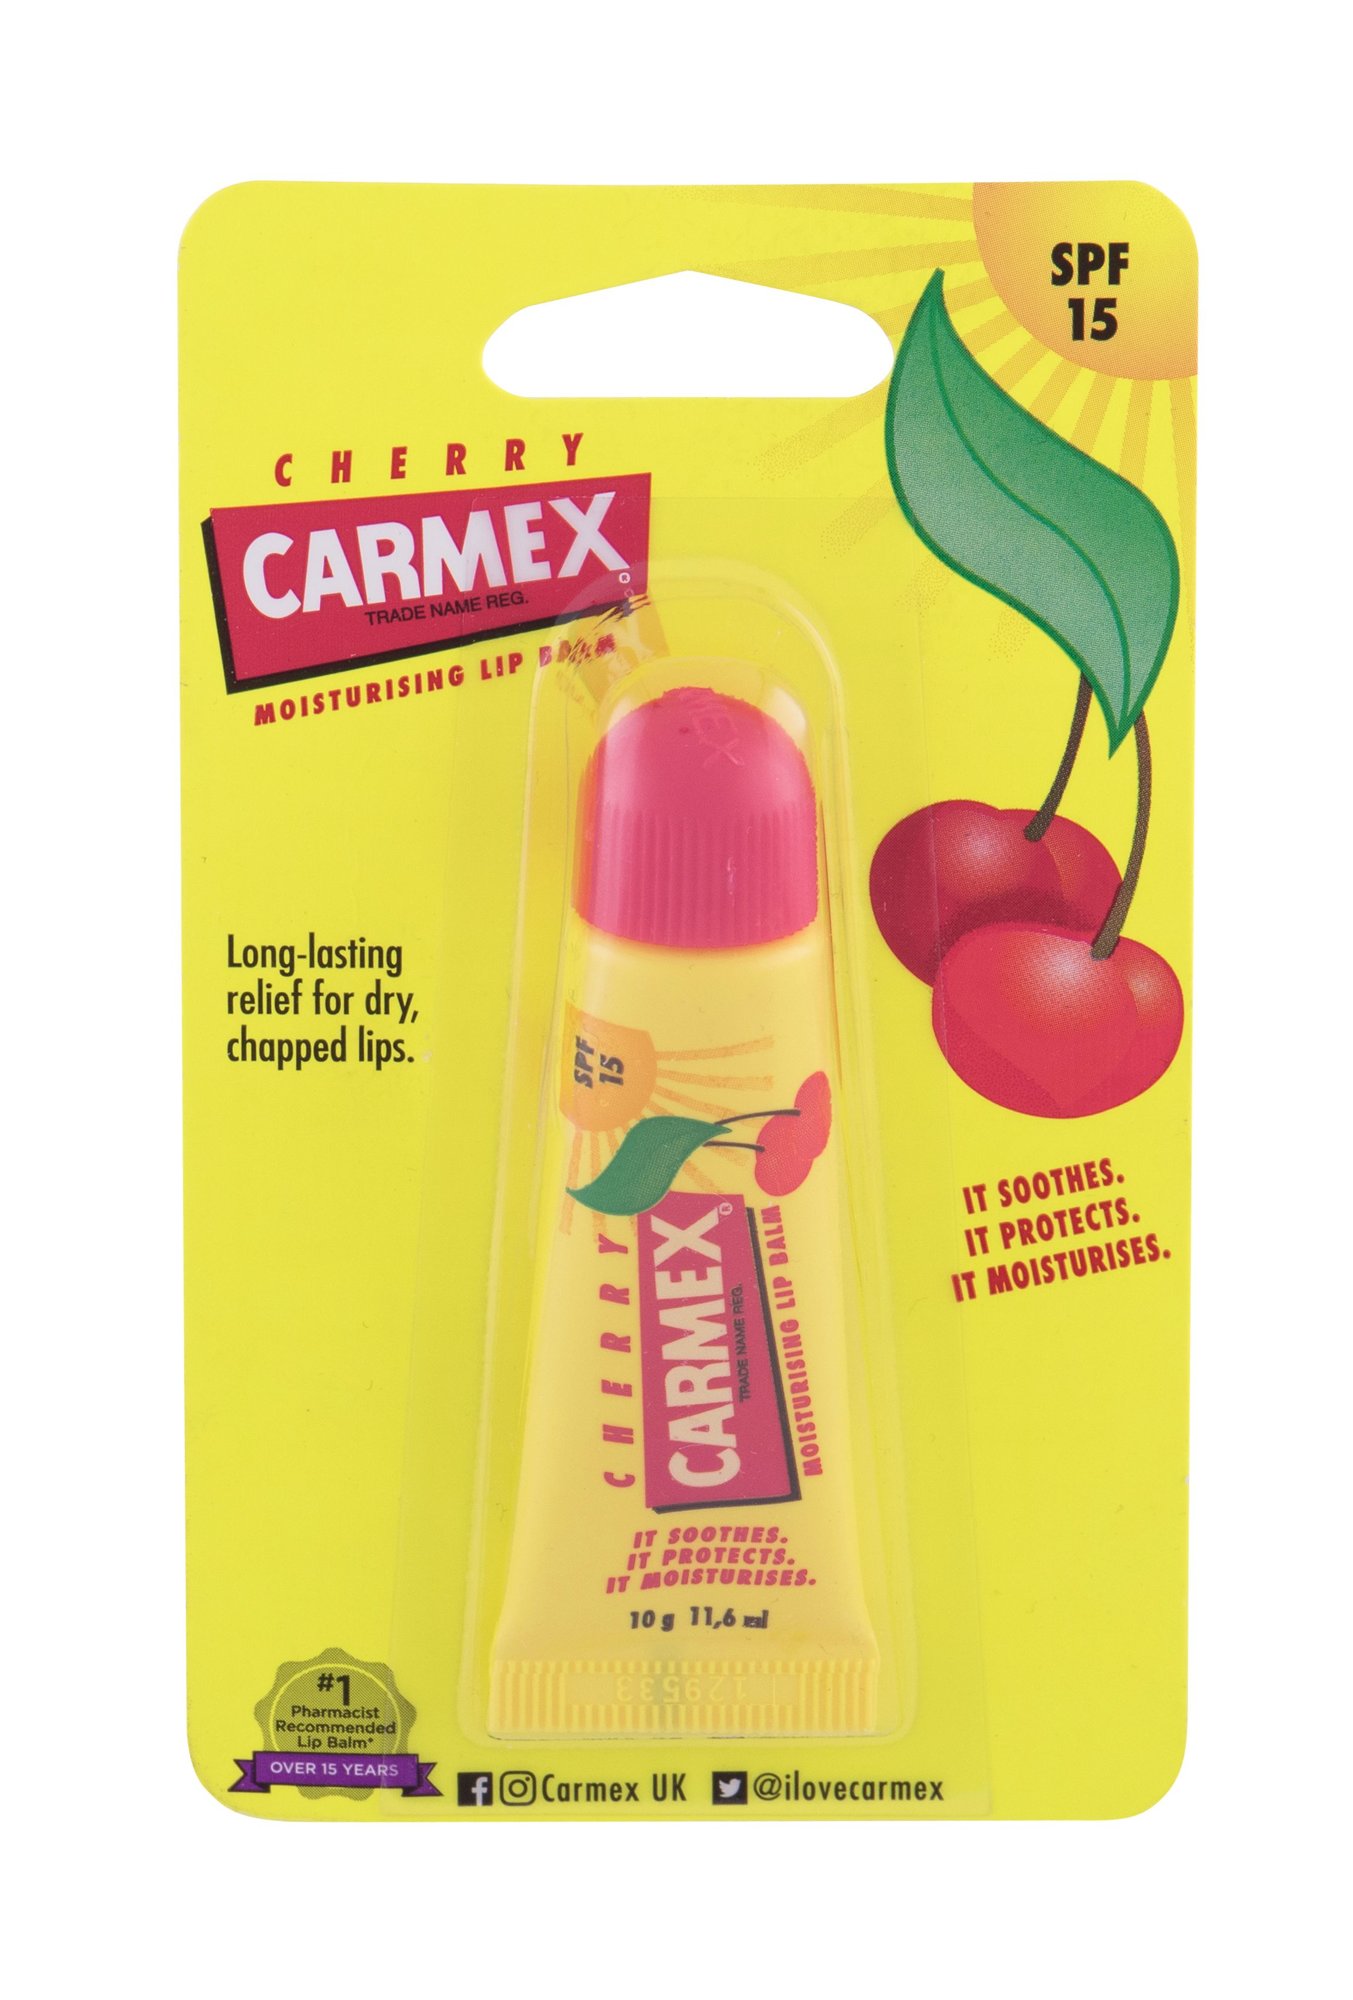 Carmex Cherry lūpų balzamas